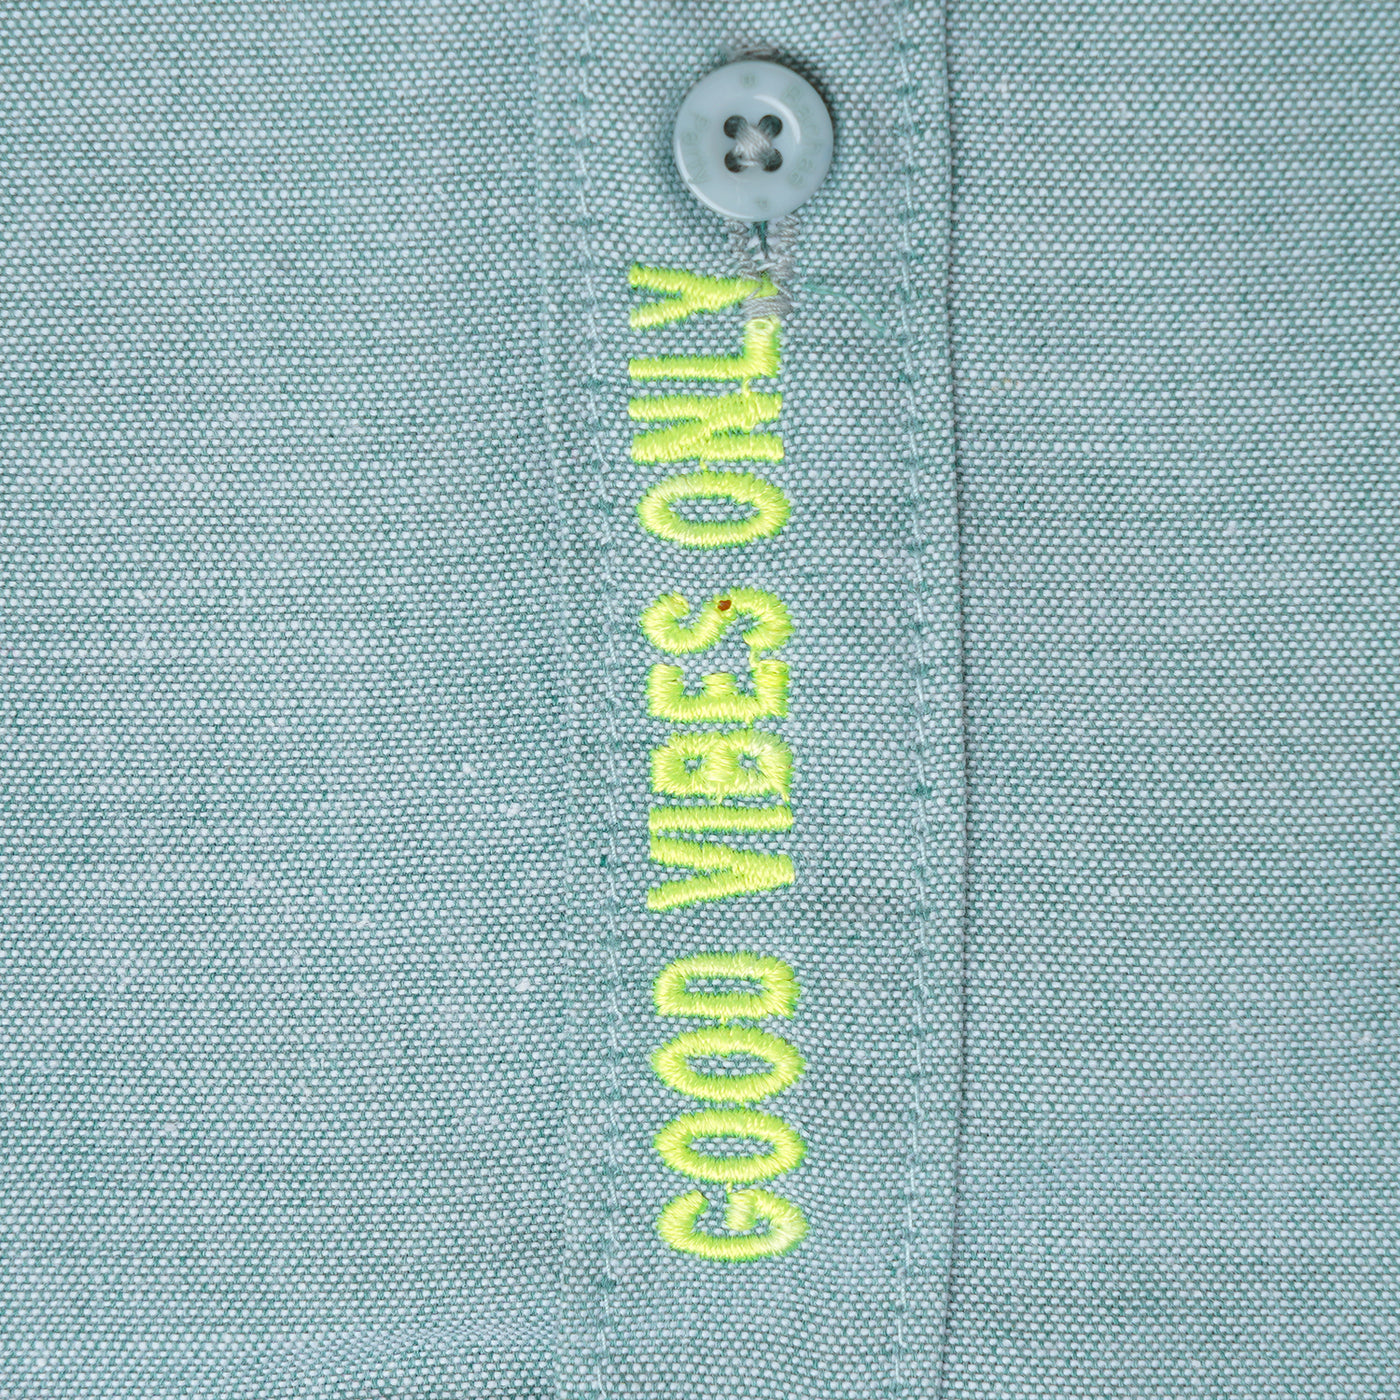 Boys Casual Shirt Good Vibes - LT.Green